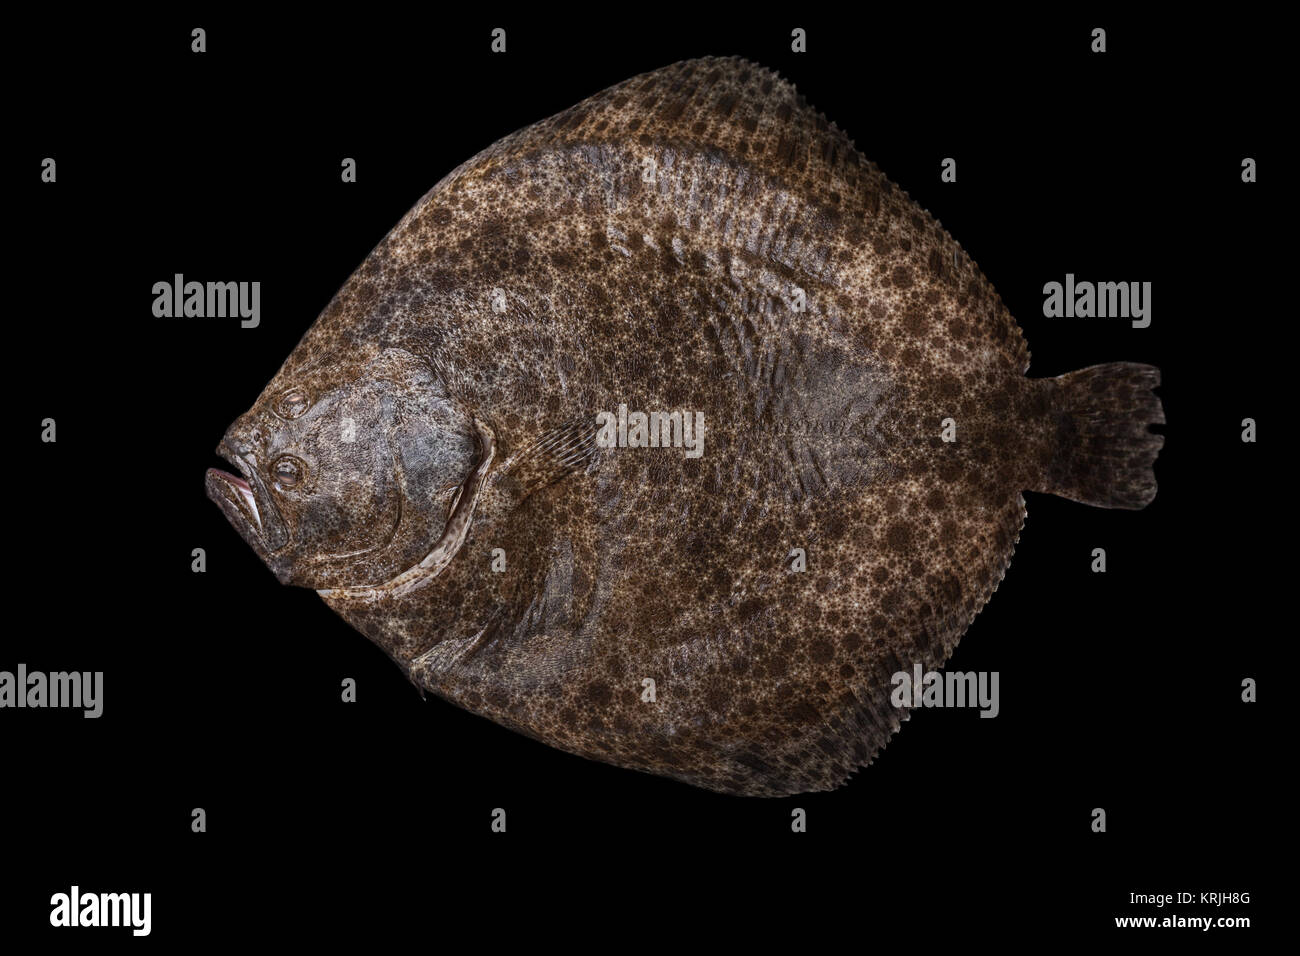 Whole raw flatfish caught in Spain Stock Photo